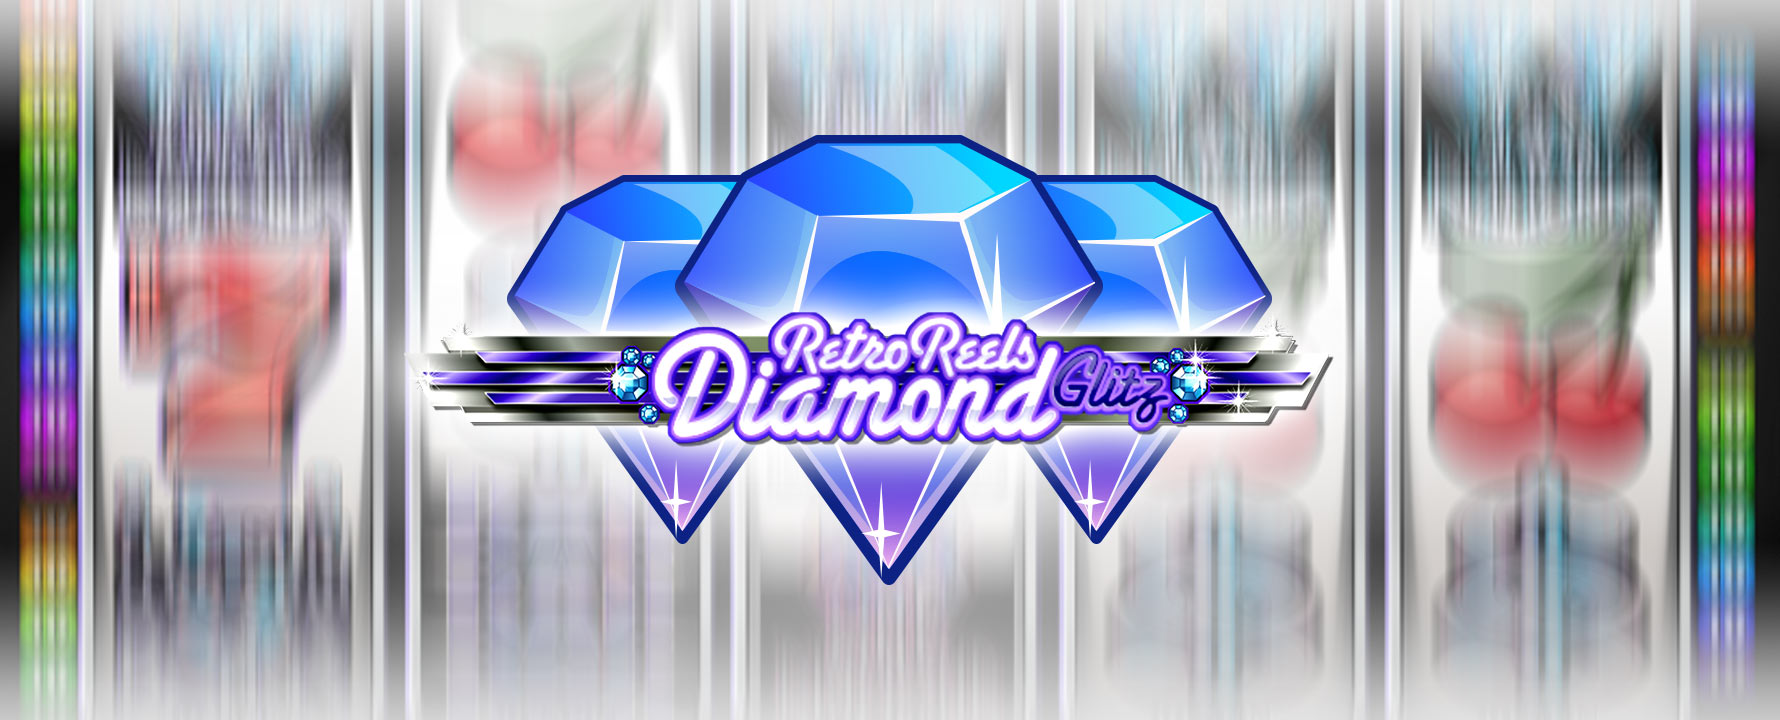 Retro Reels – Diamond Glitz online video slots game